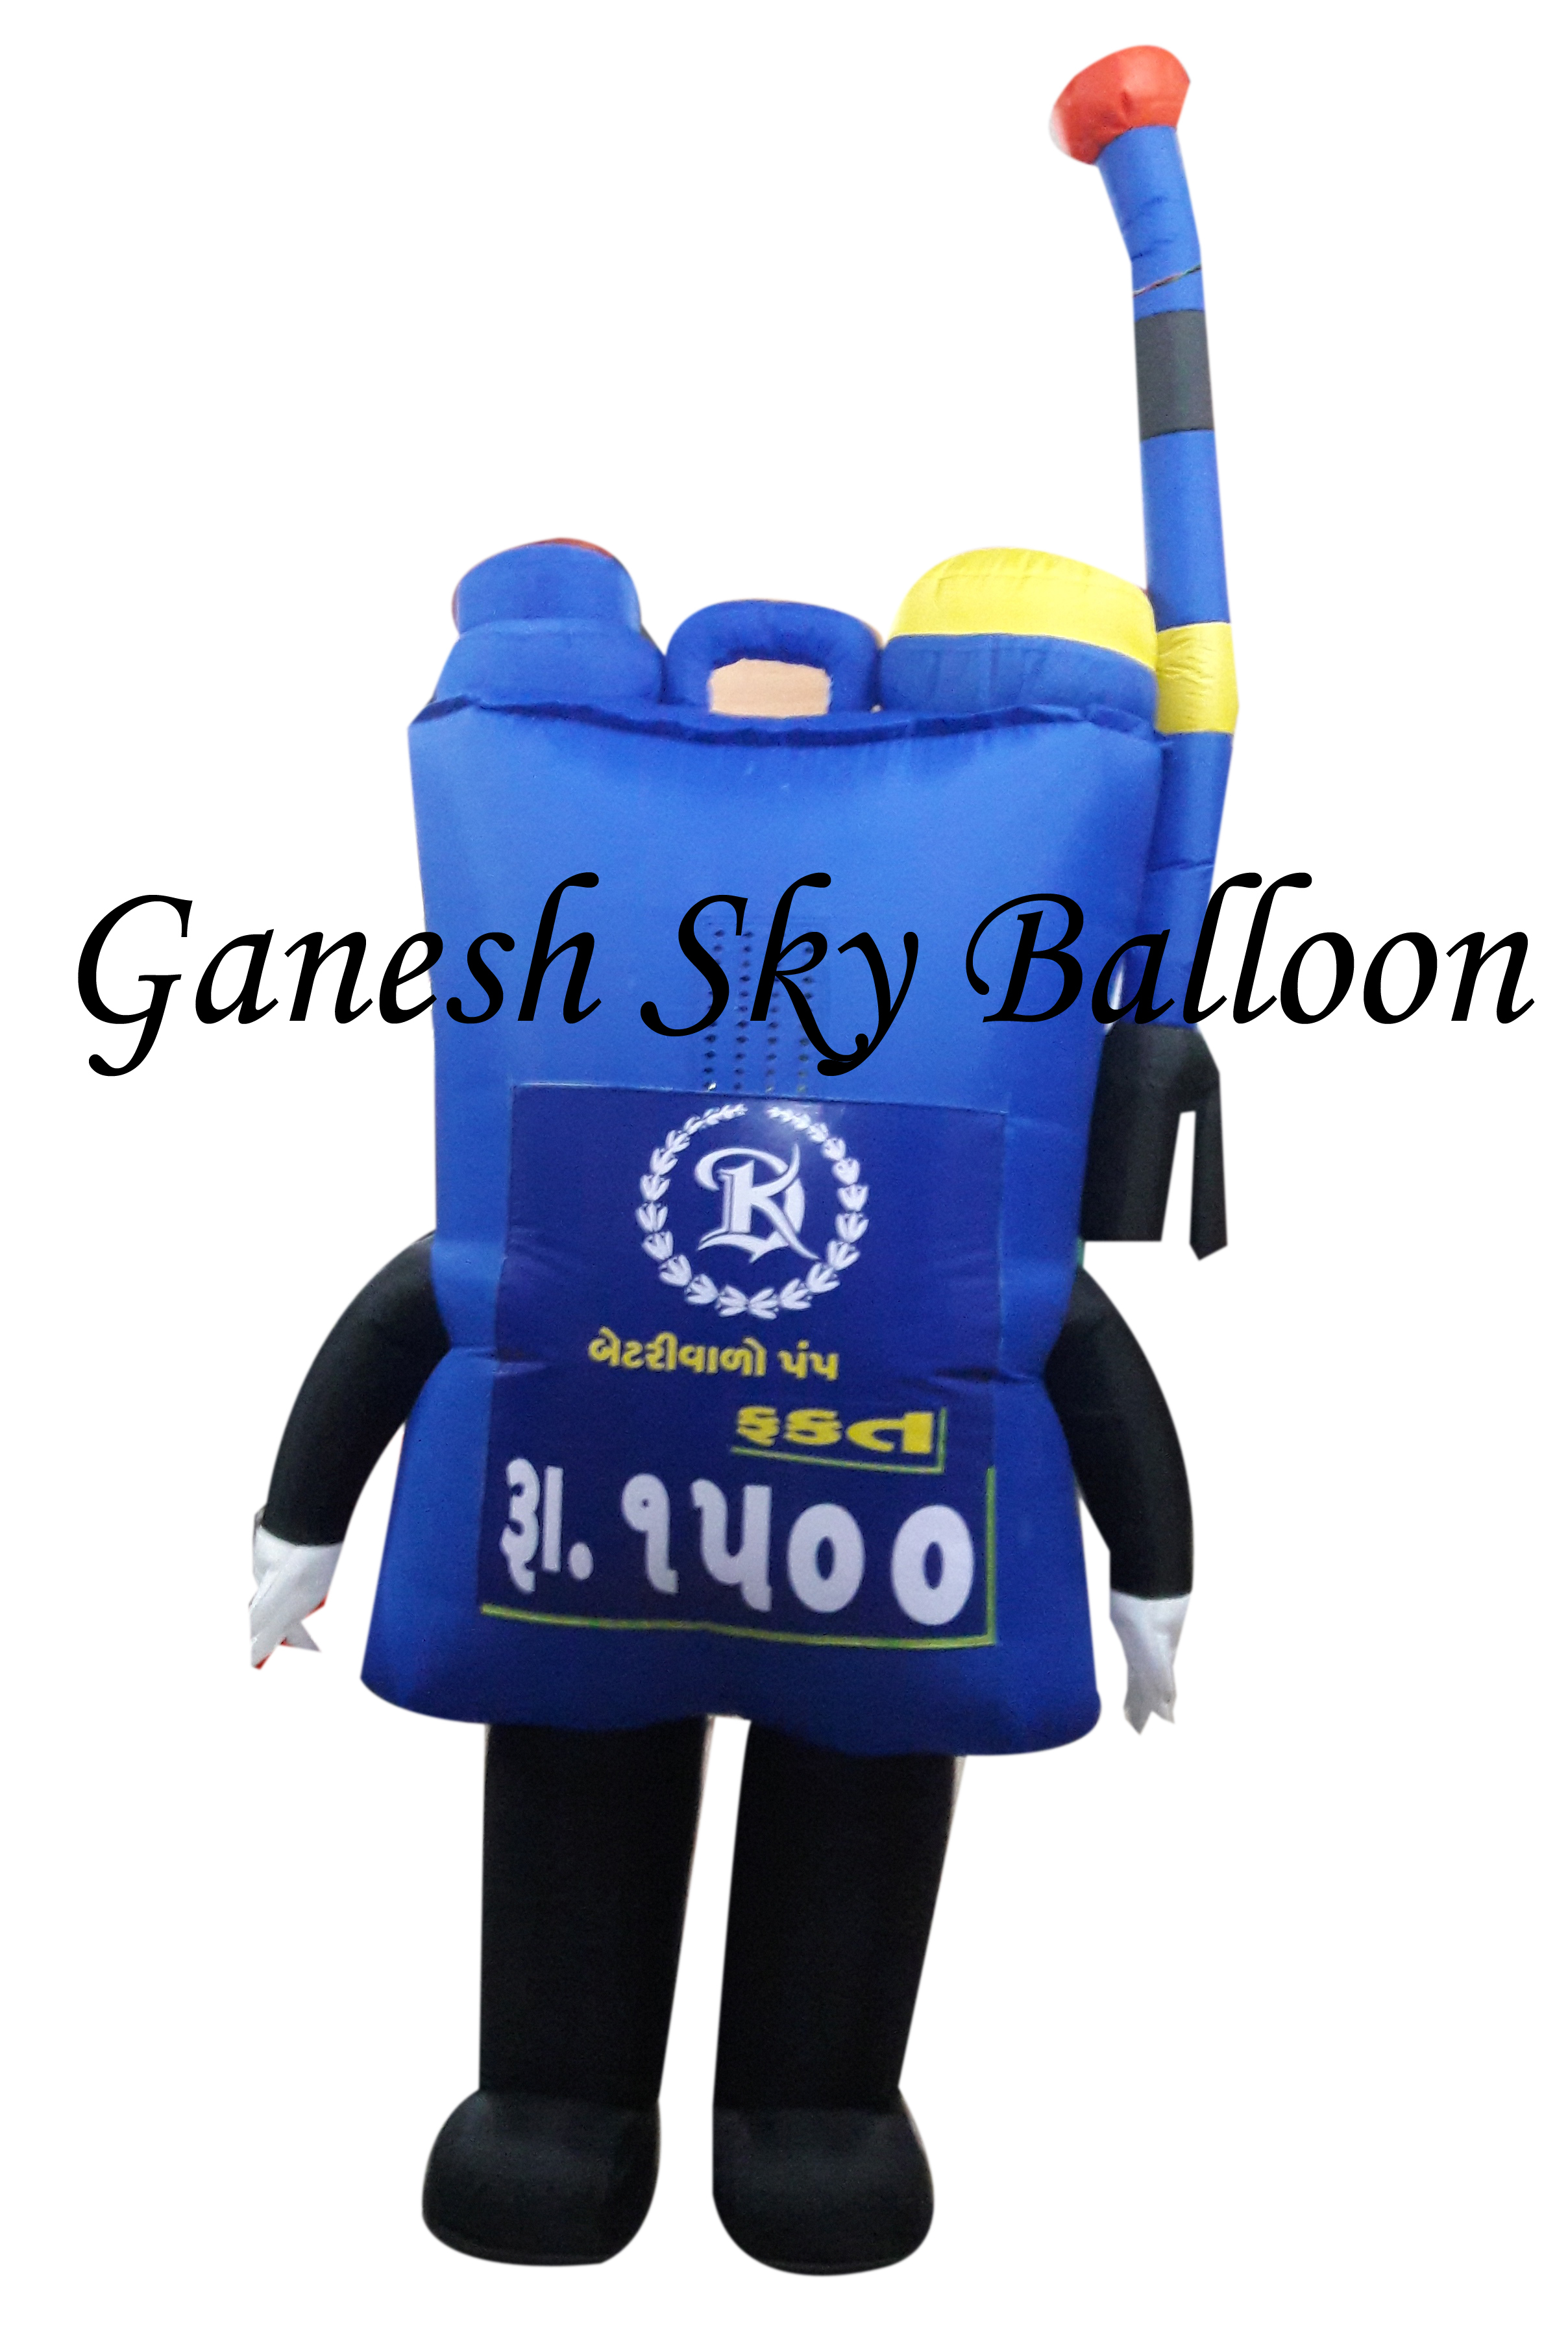 Ganesh Walking Inflatables